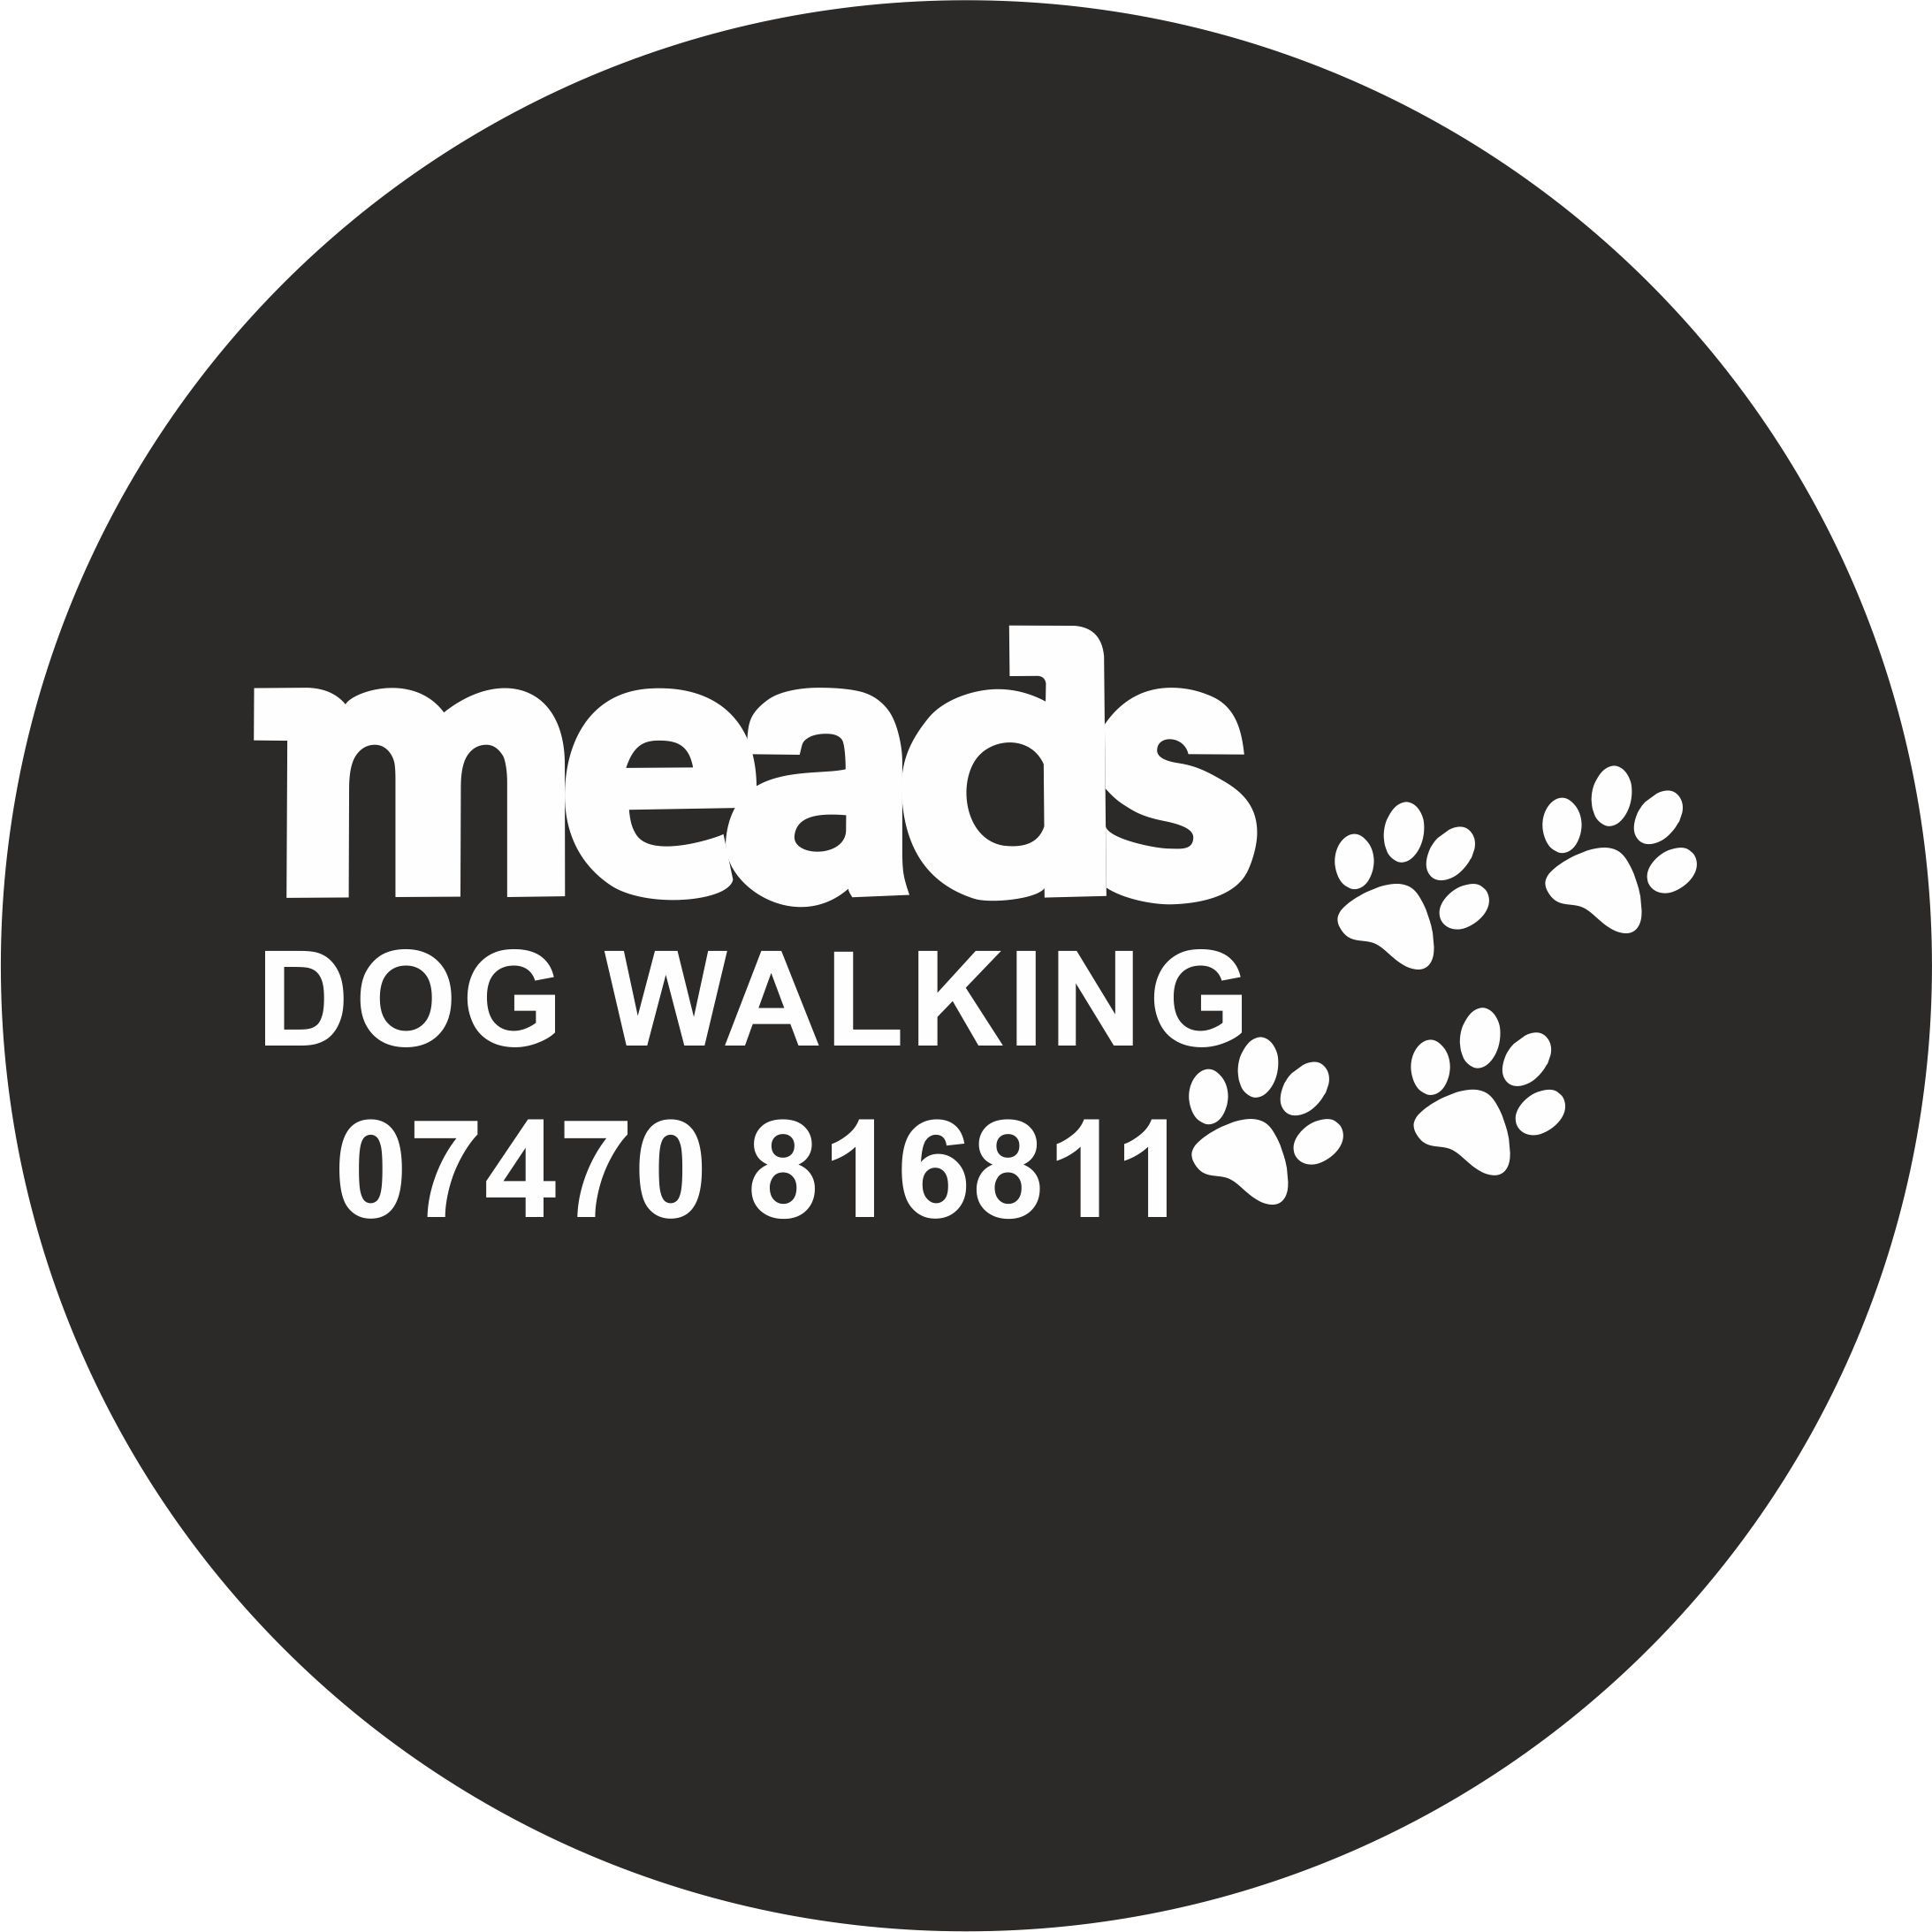 Meads Dog Walking